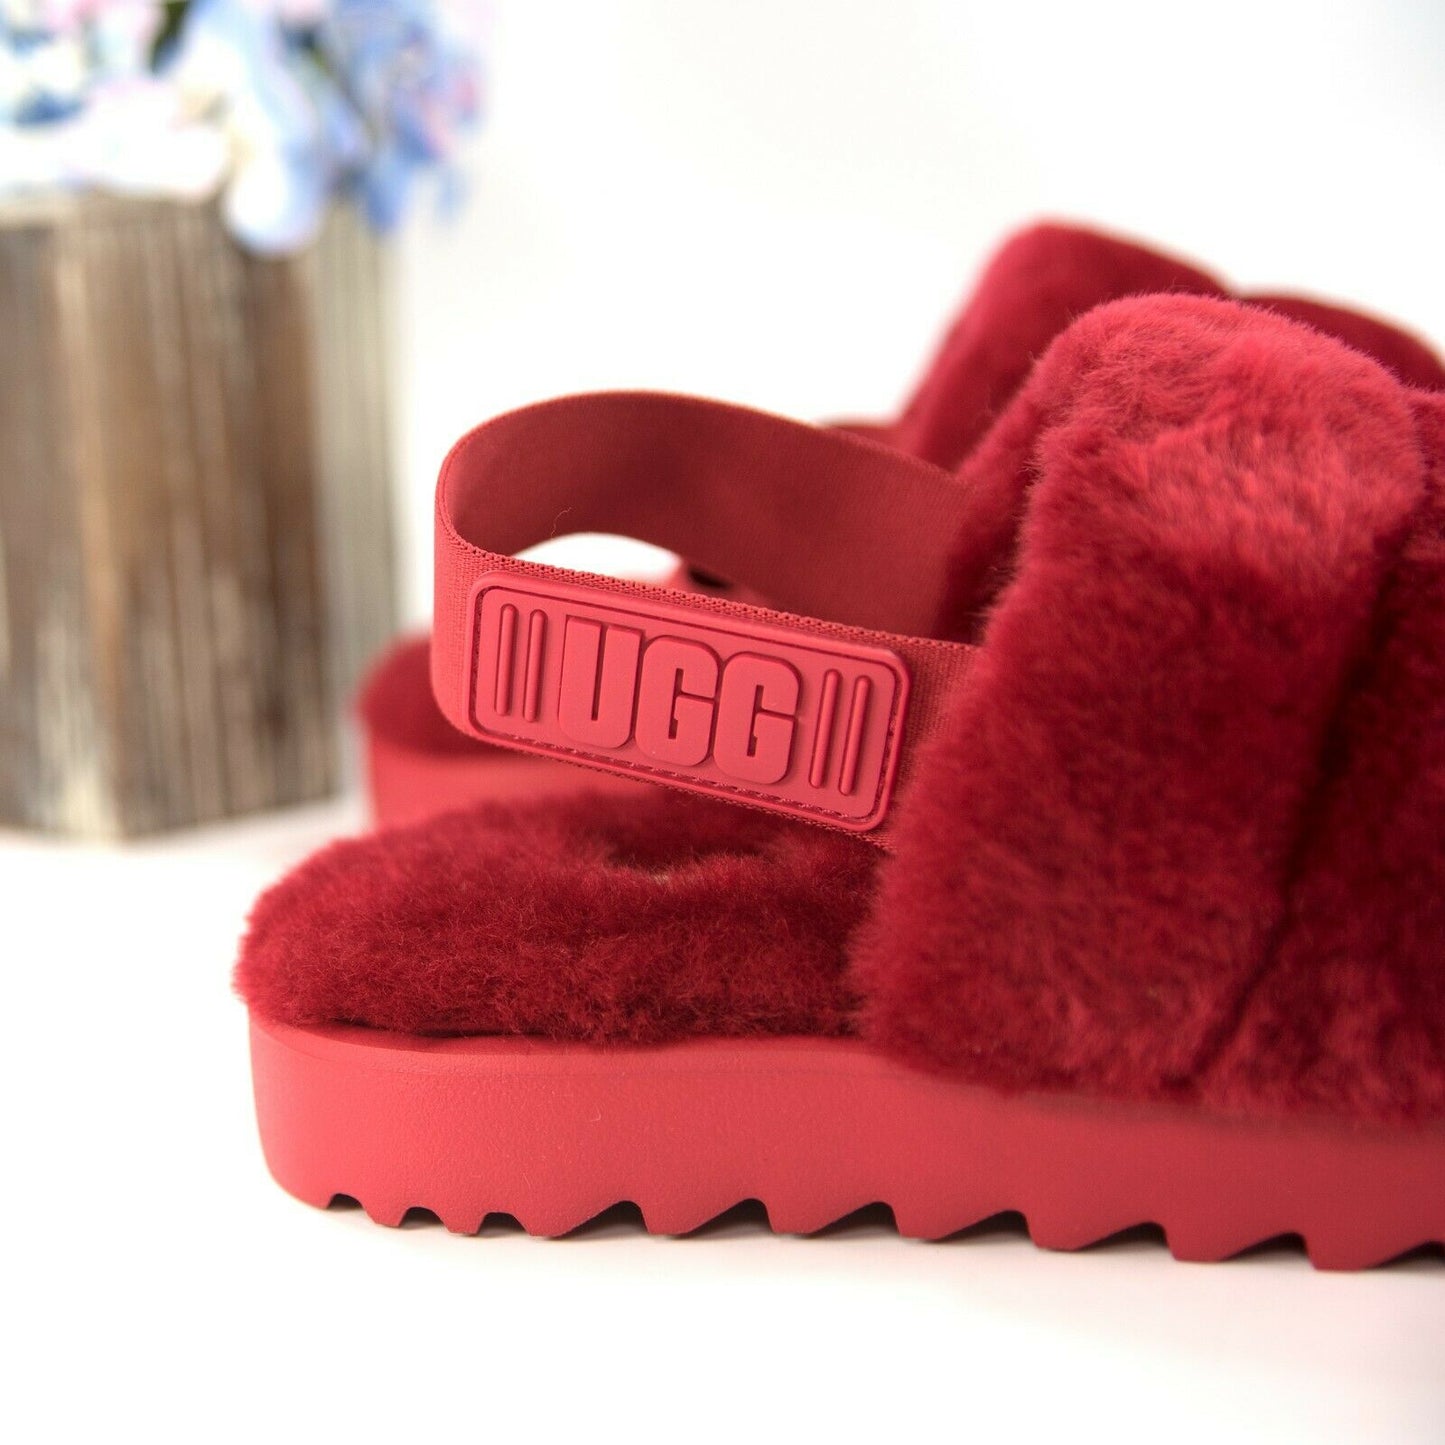 UGG Fluff Oh Yea Robe Red Sheepskin Fur Slippers Slides Sandals Size 6 NIB